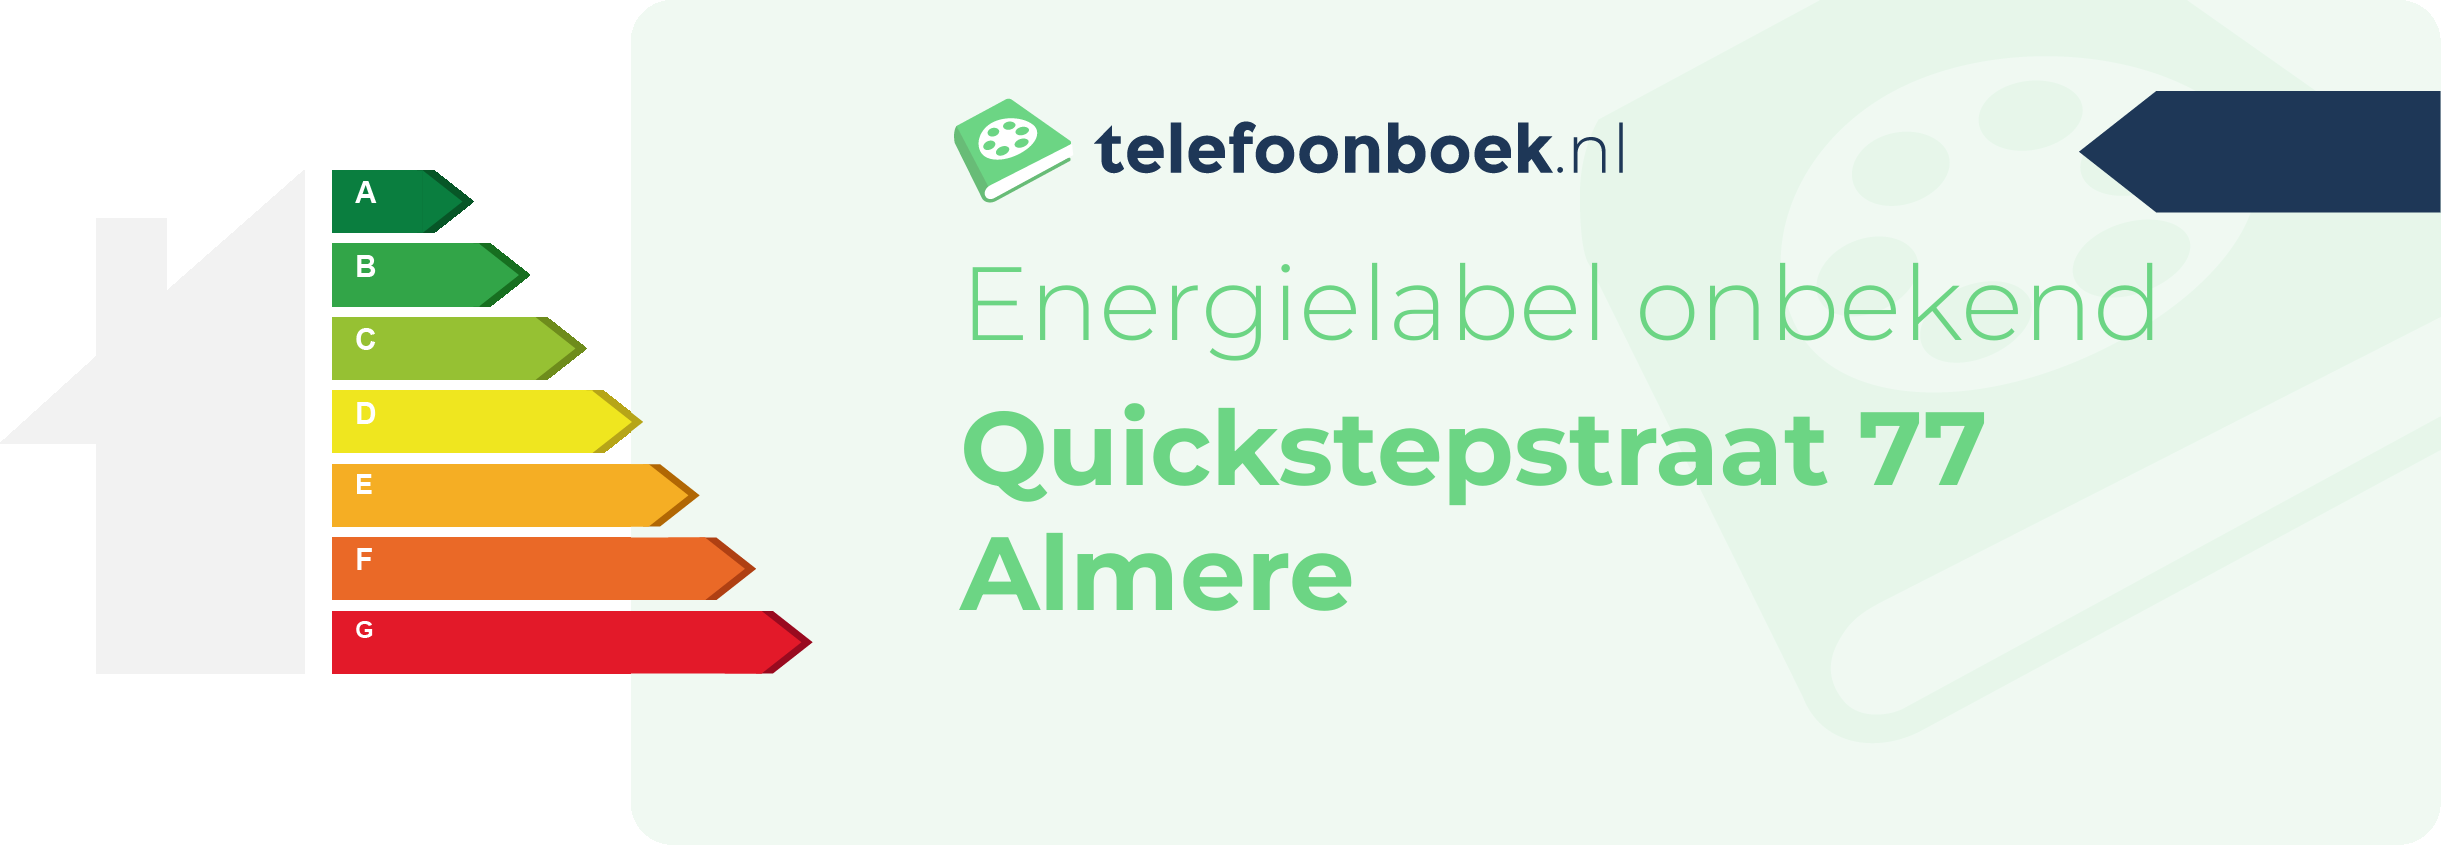 Energielabel Quickstepstraat 77 Almere